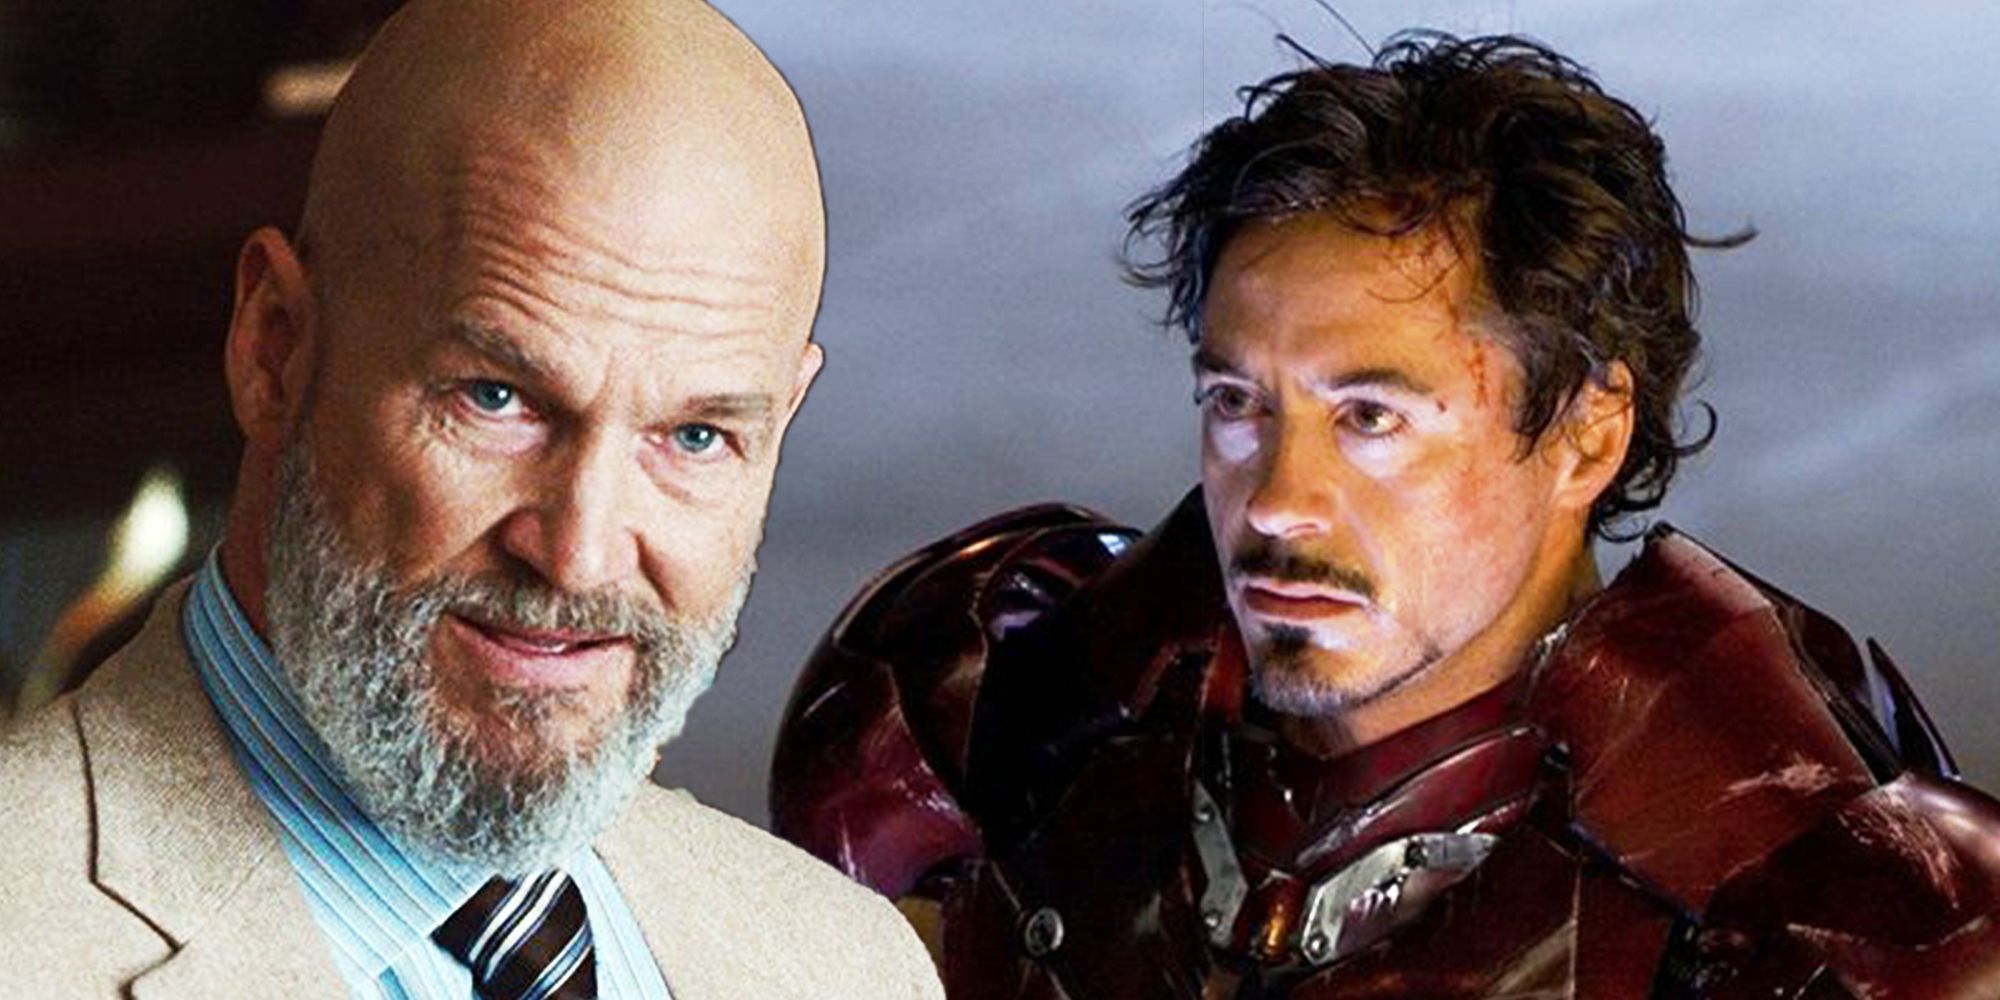 Obadiah Stane and Tony Stark in Iron Man 2008